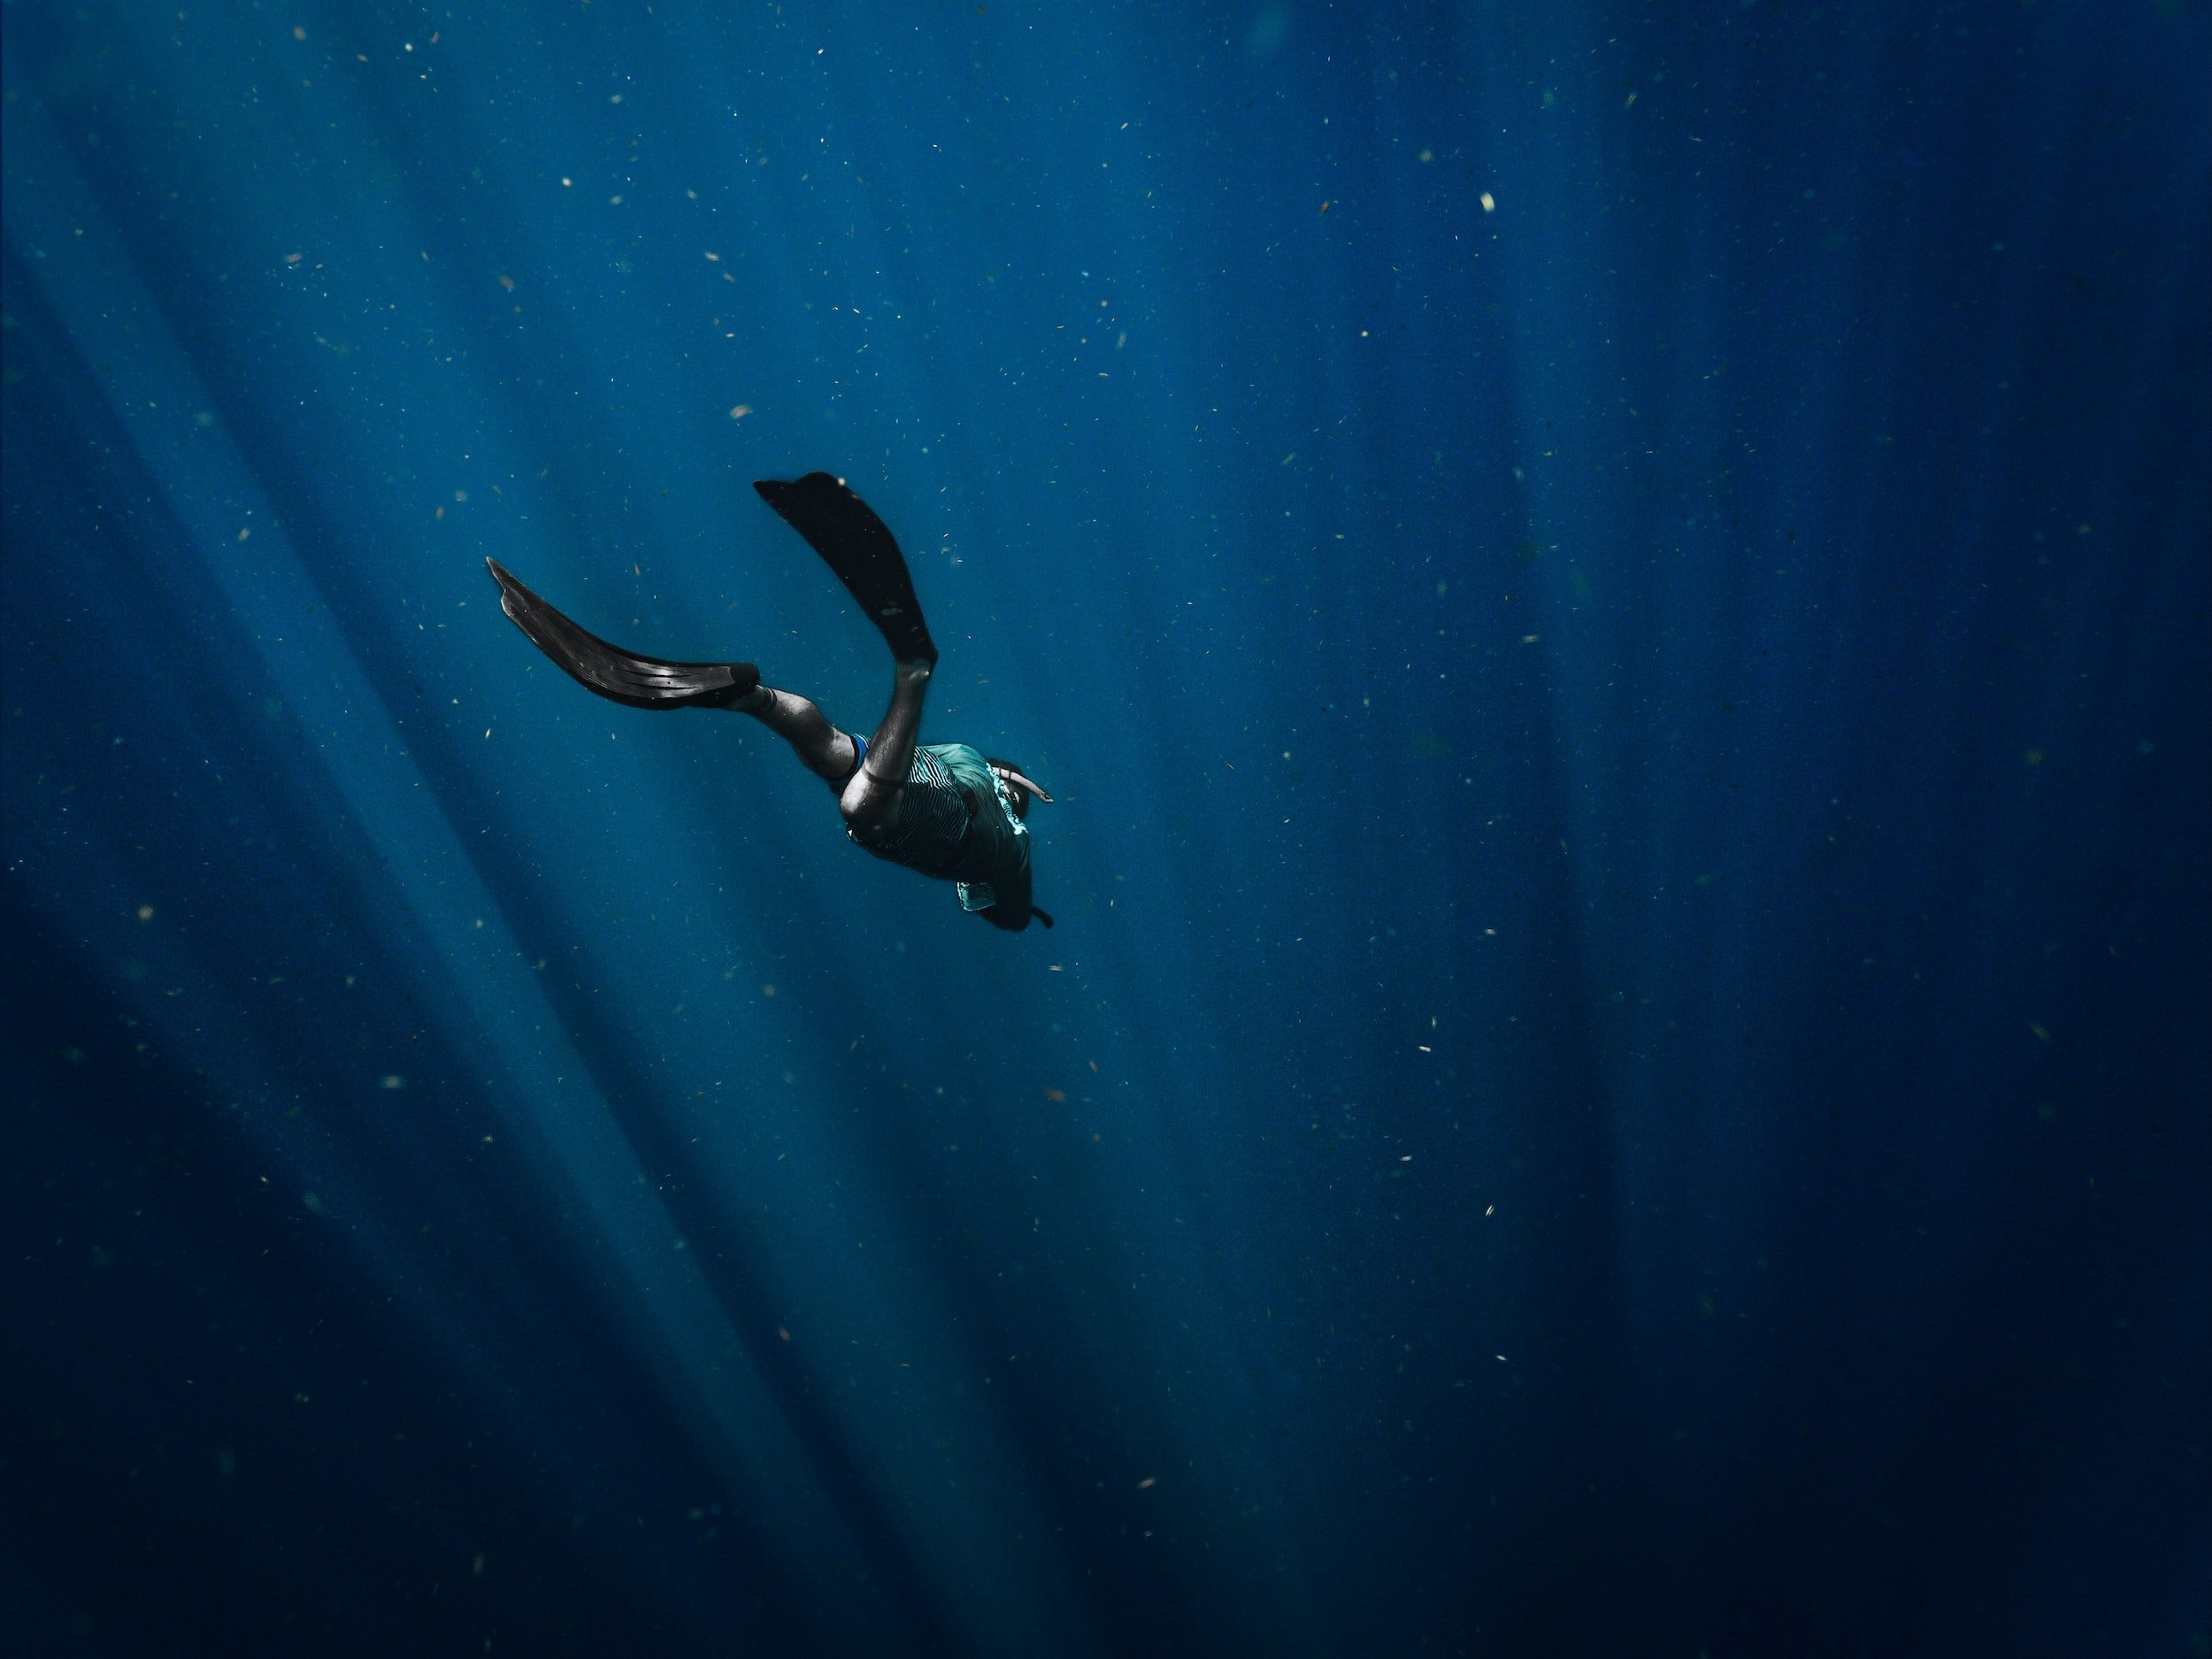 Scuba diving in the Mediterranean